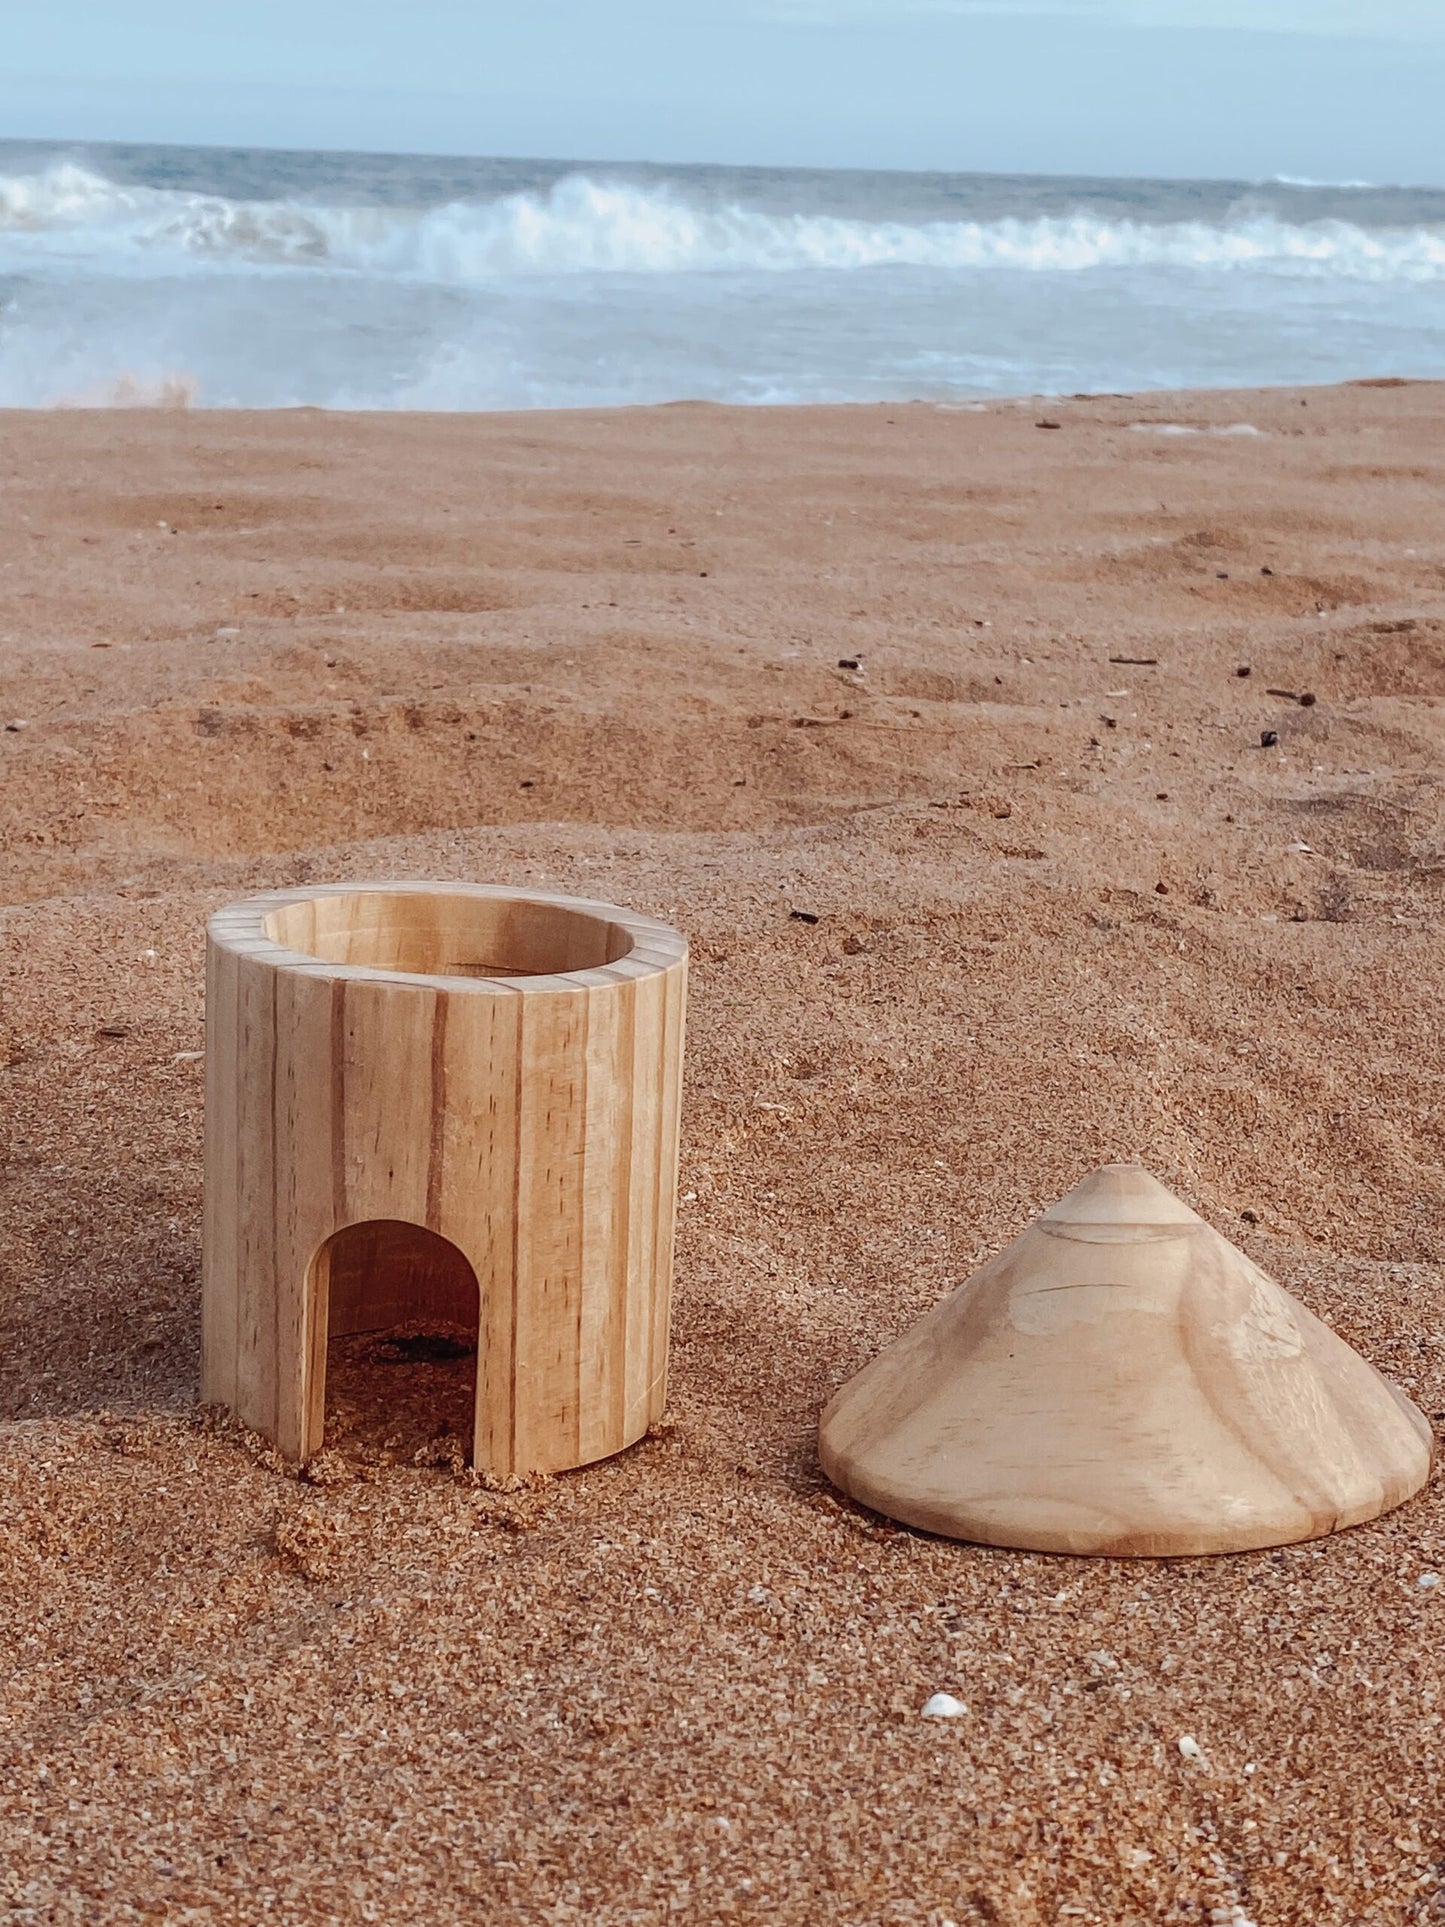 Small World- Wooden Hut